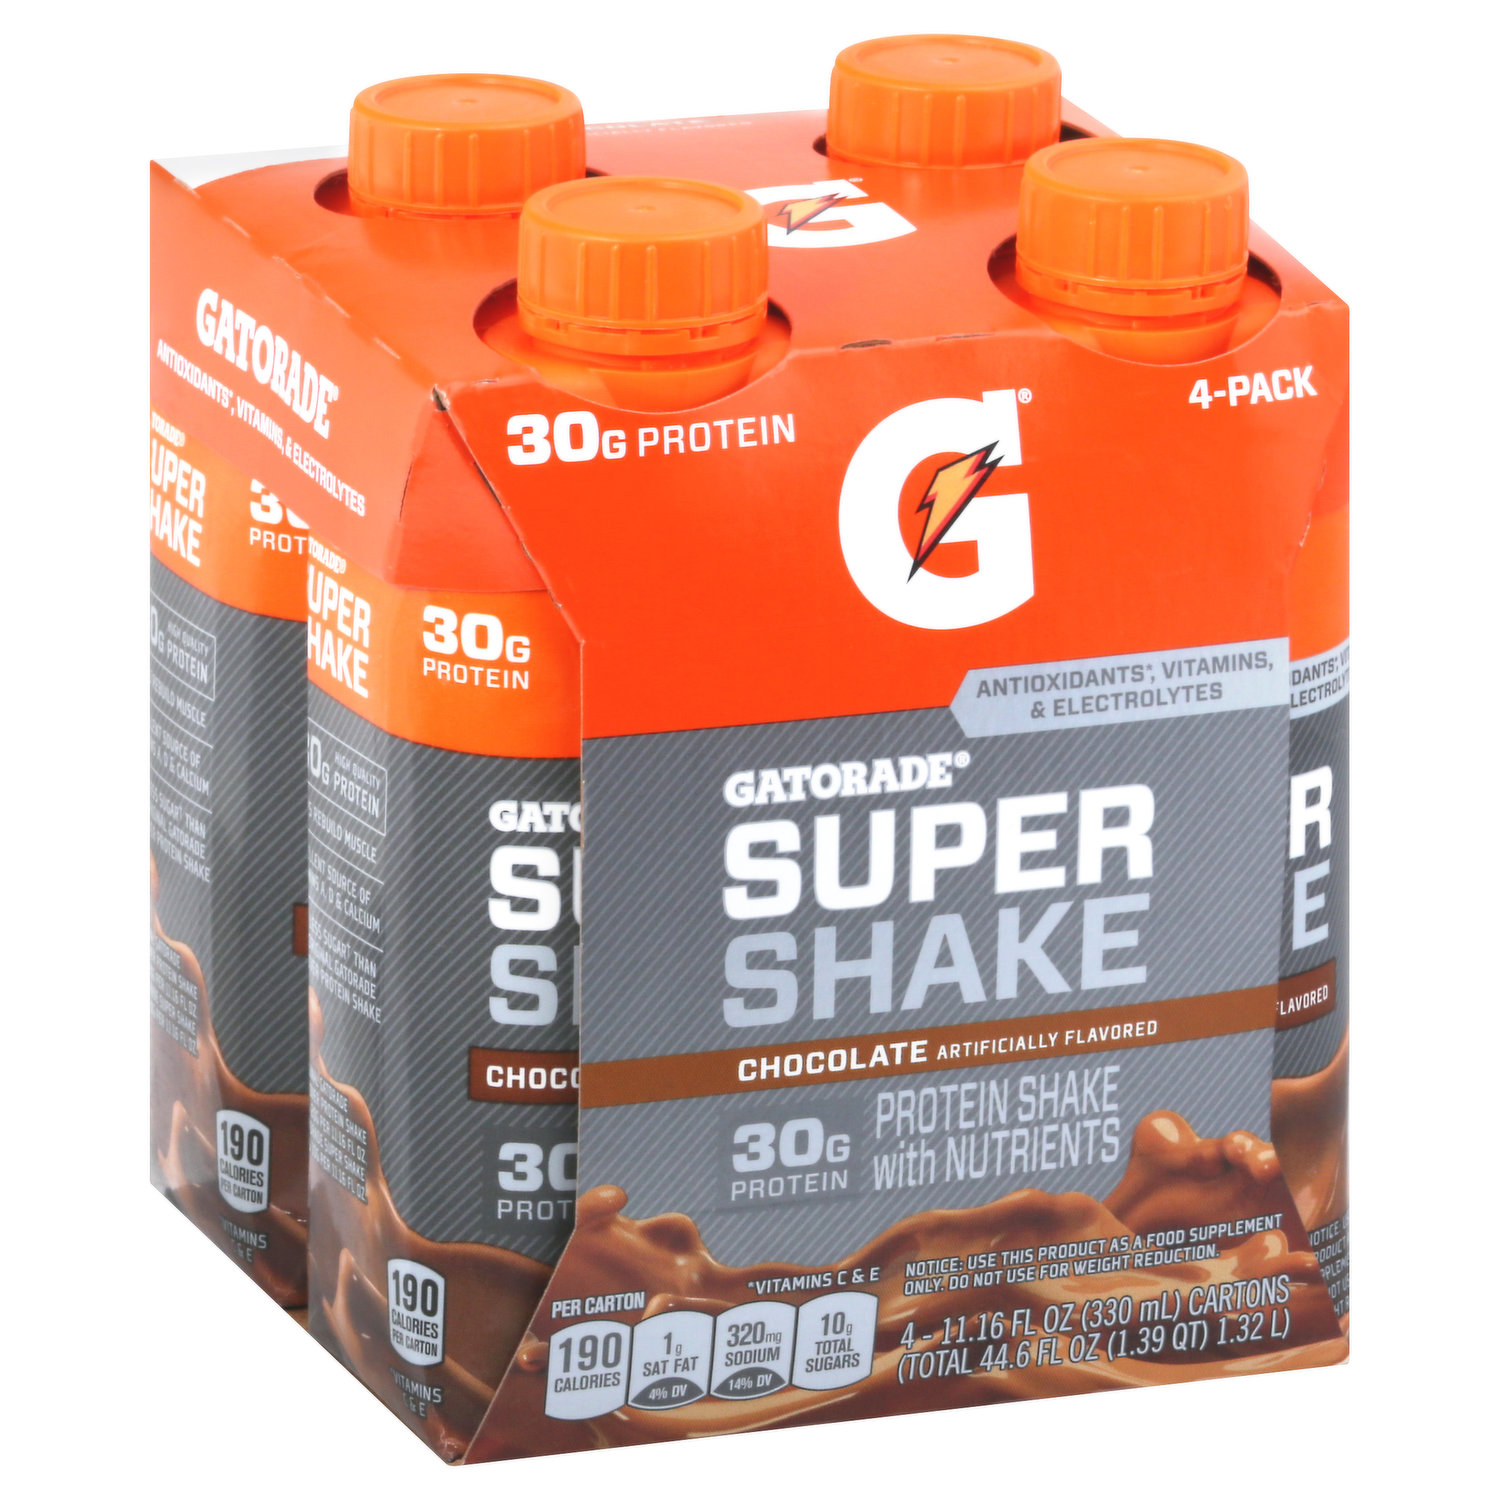 Gatorade Super Shake, Chocolate, 30g Protein, 11.16 fl oz Carton